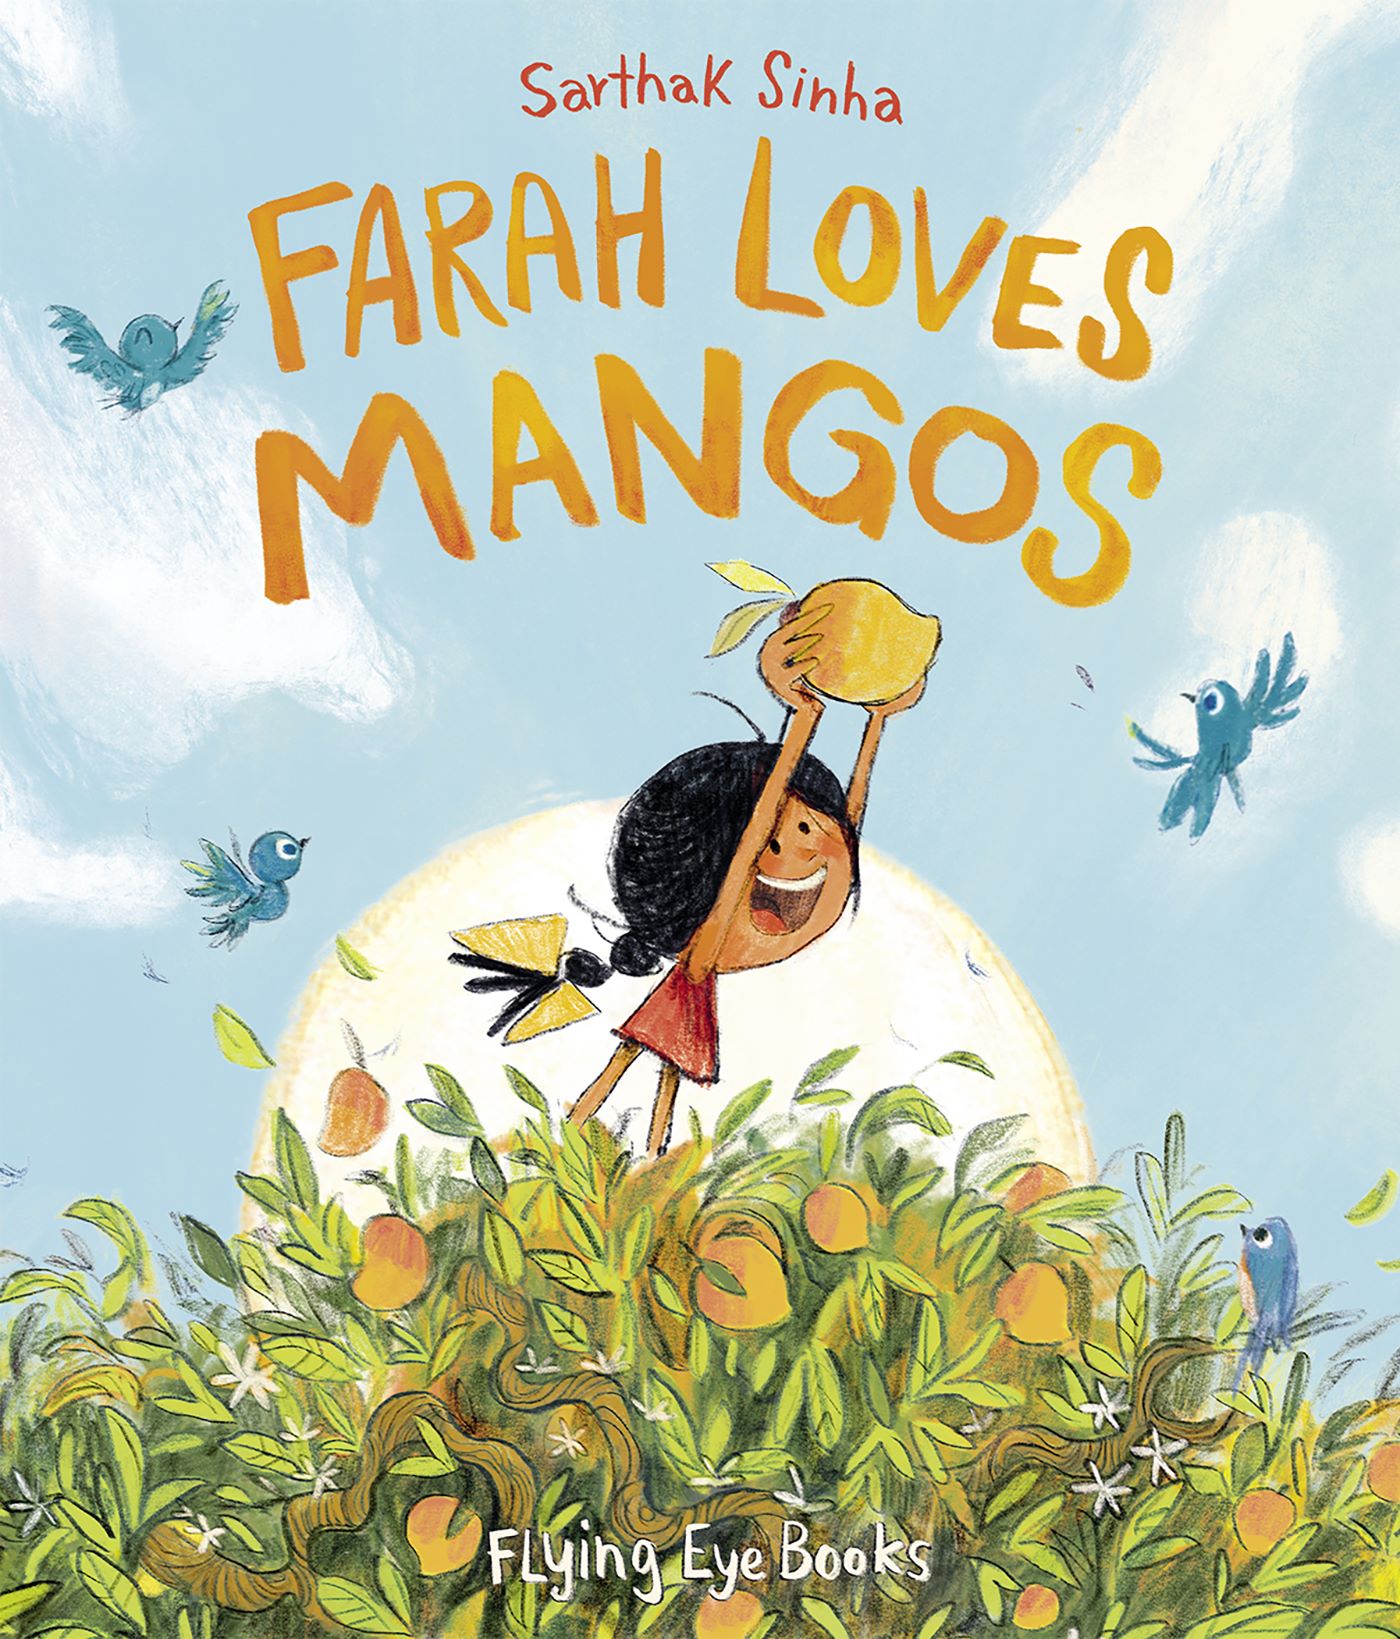 Farah Loves Mangos (Hardcover)